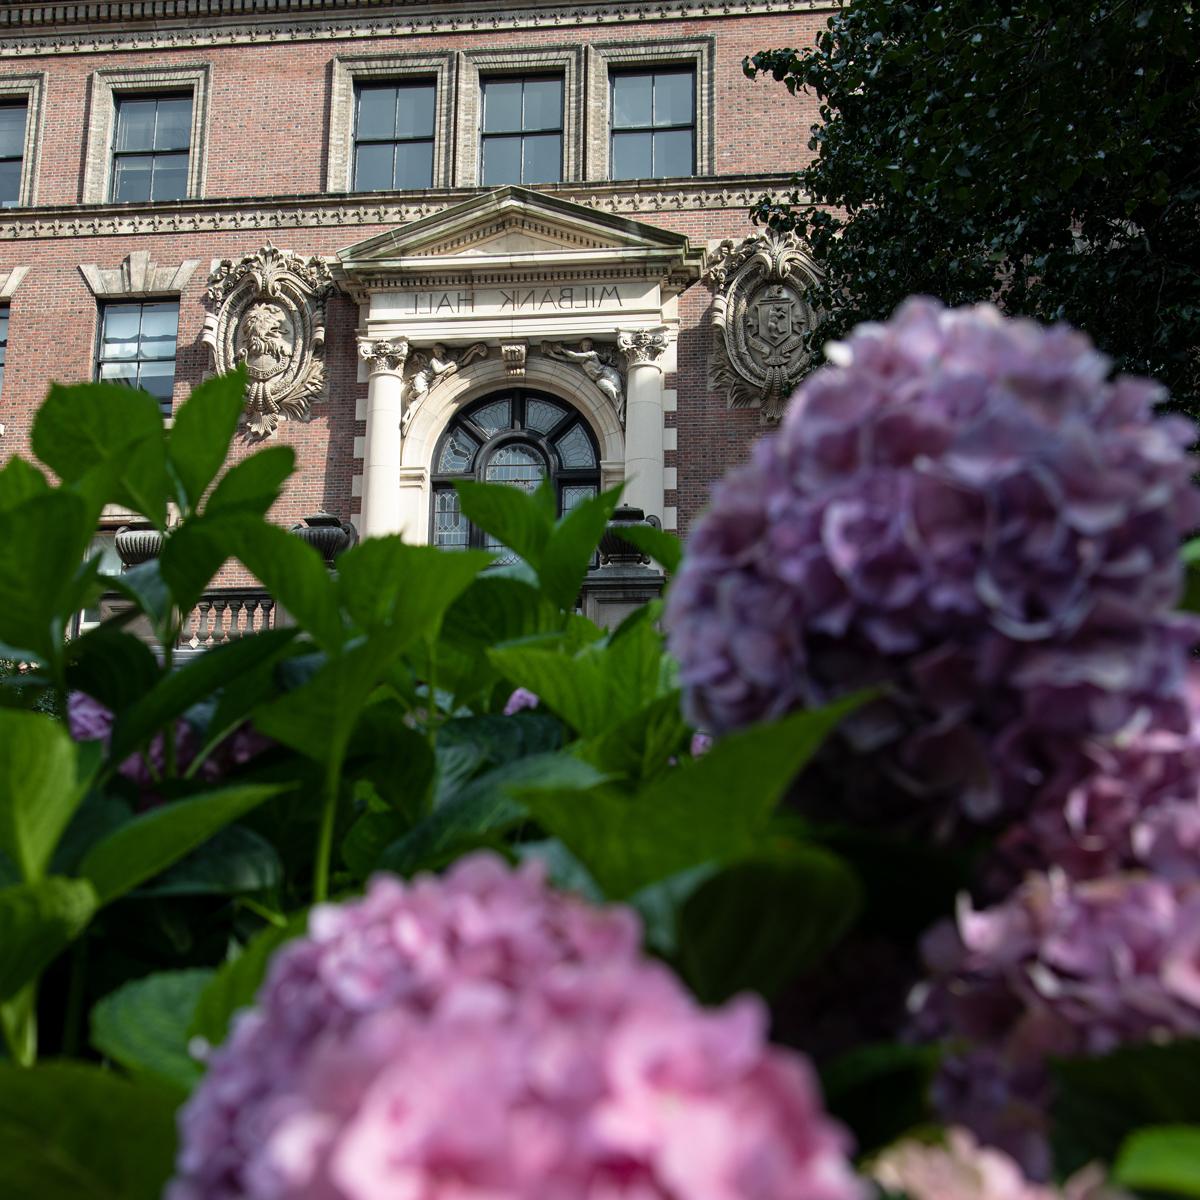 Hydrangeas bloom in front of Milbank Hall